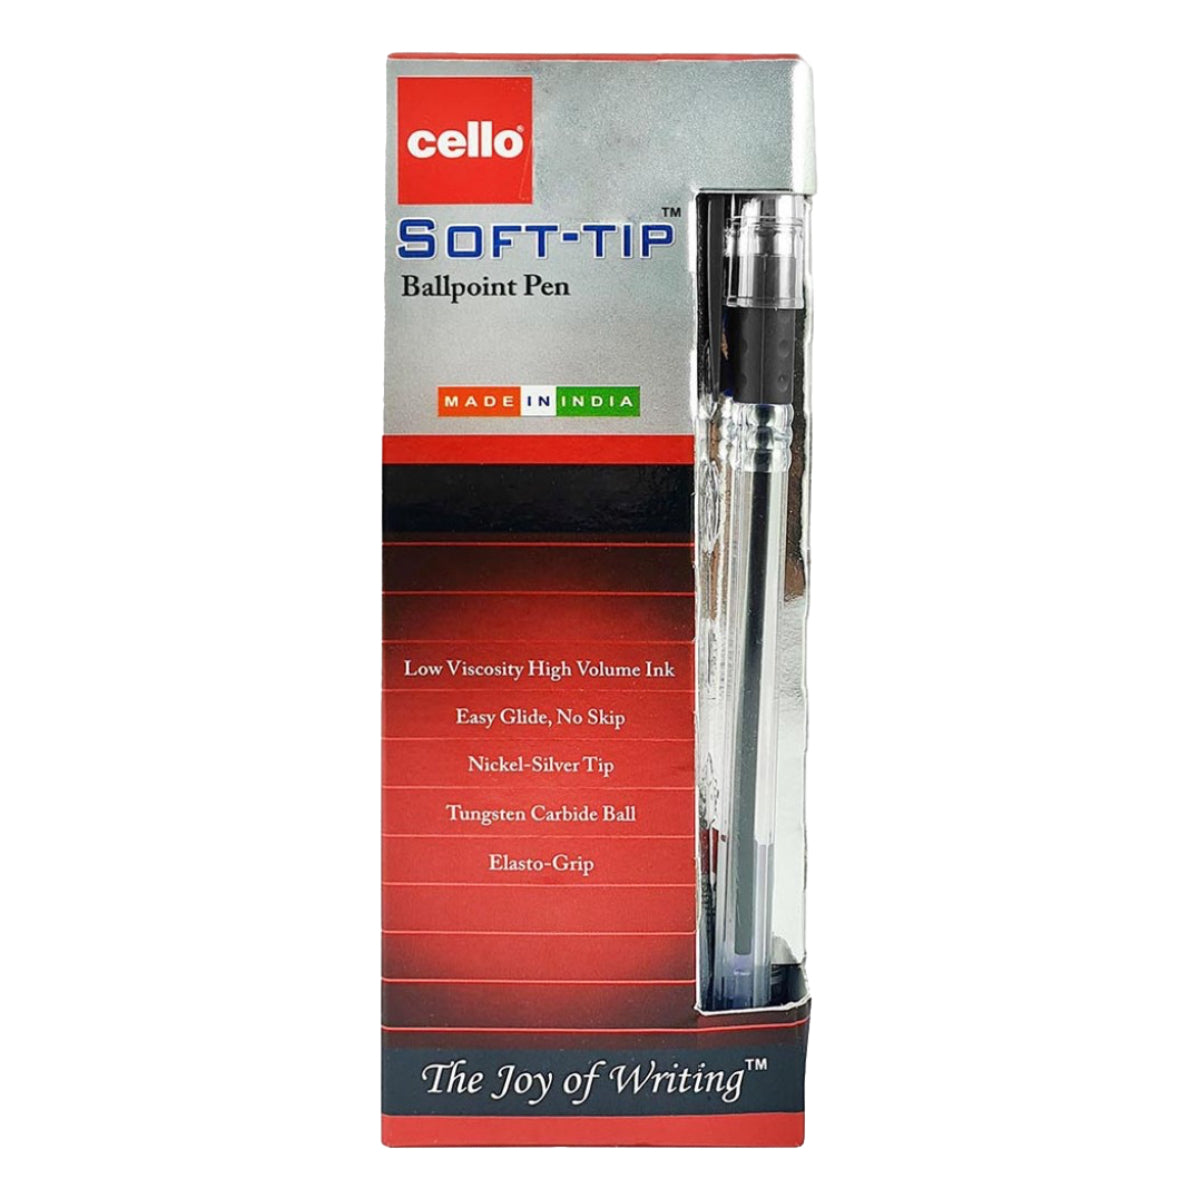 Cello Ballpoint Pen soft tip, 0.7mm, 12/box, Black